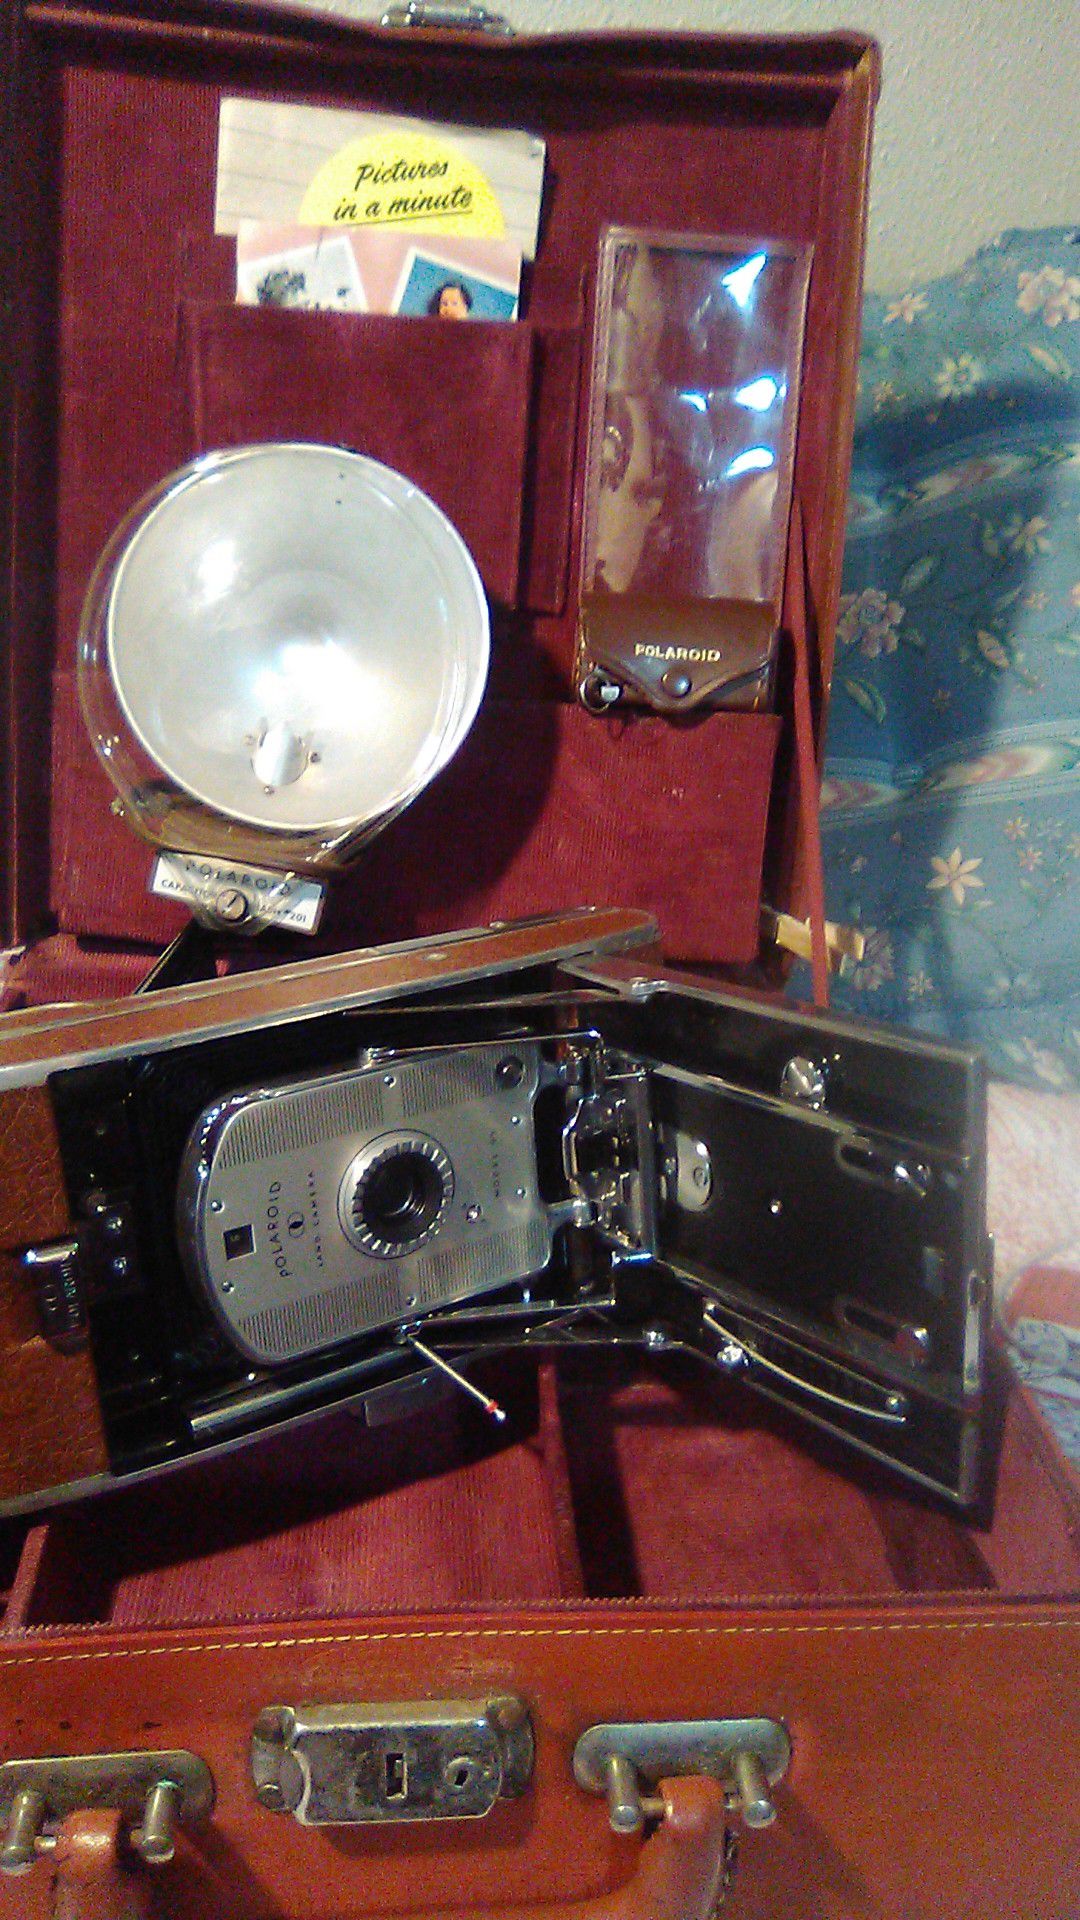 Polaroid, land camera and case, sirca 1950s